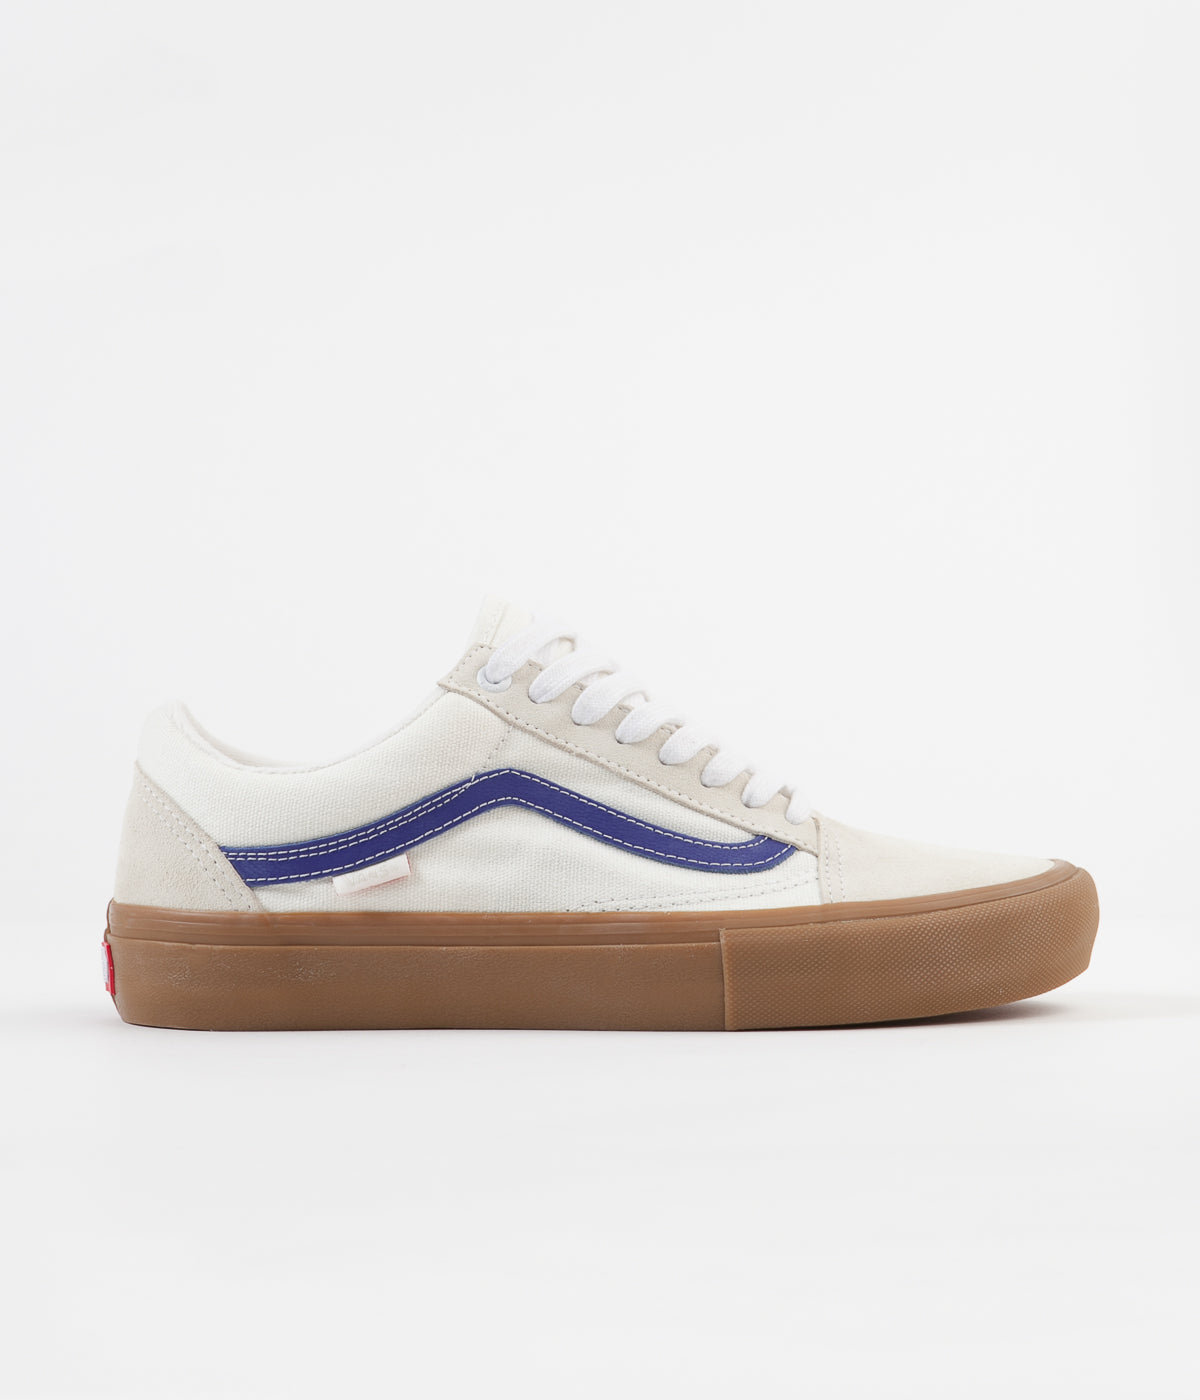 Vans Old Skool Pro Shoes - Marshmallow / Blue | Flatspot